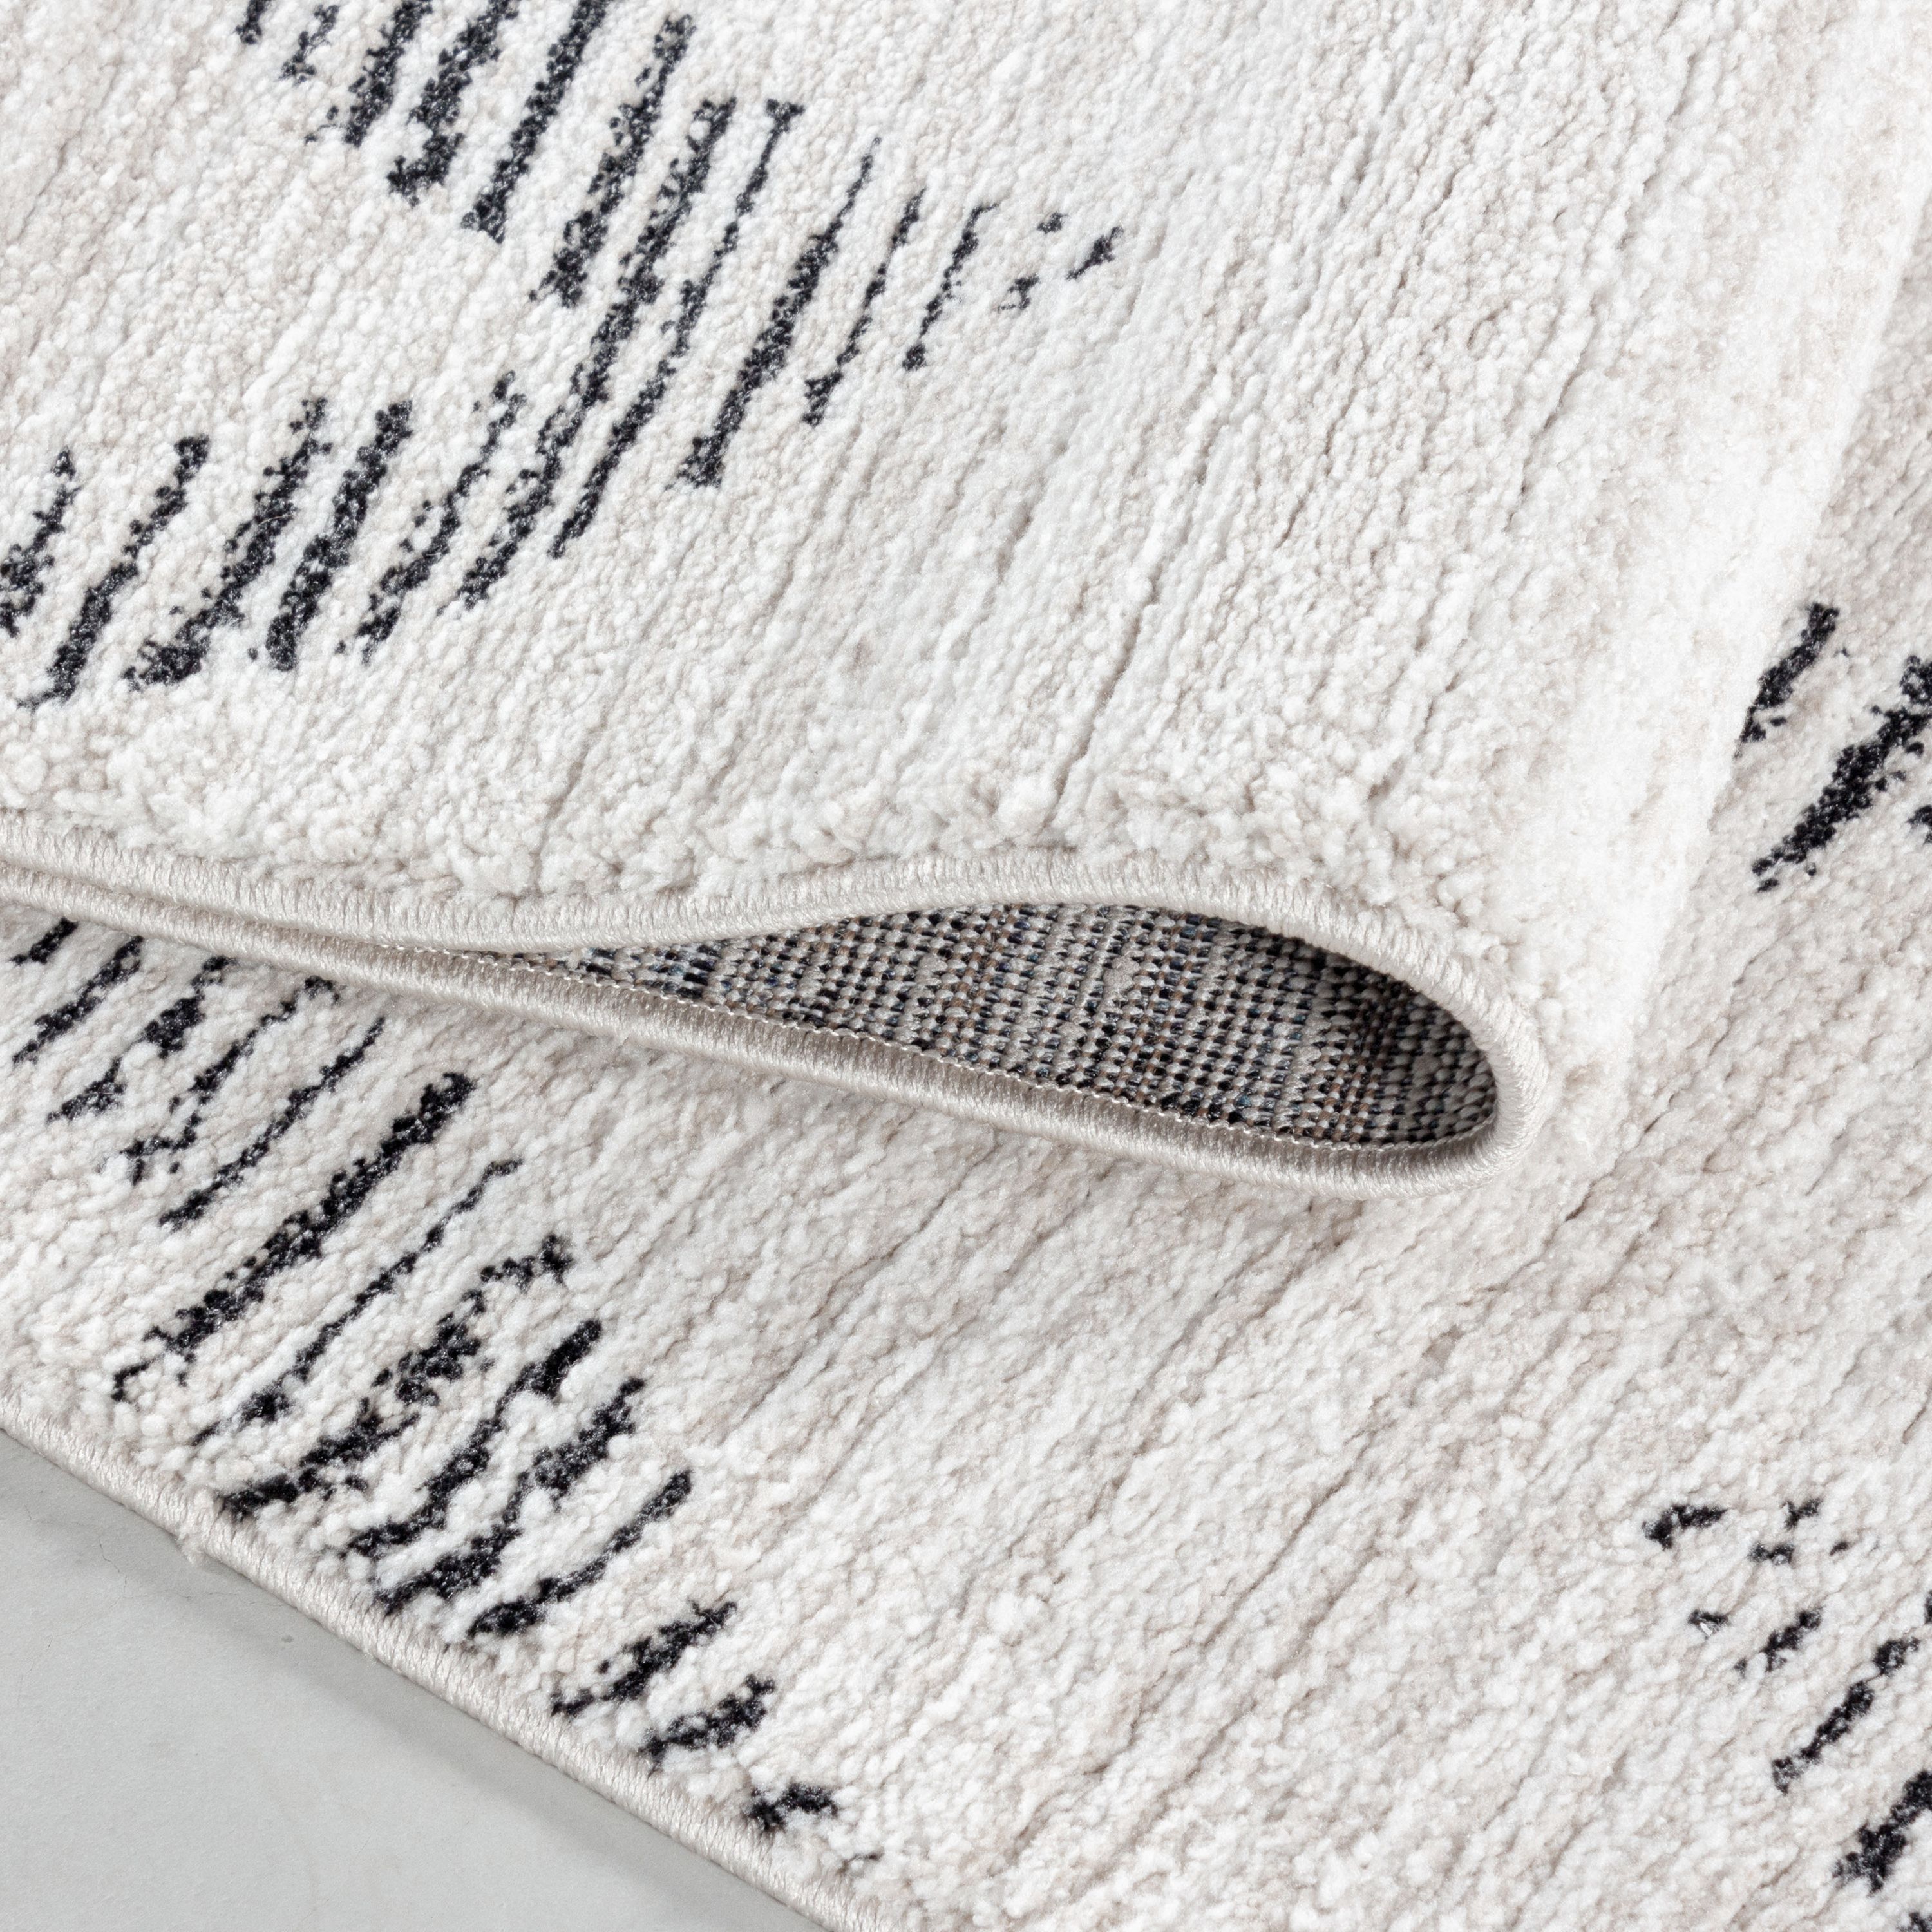 Tapis à poils courts salon tapis design scandinave style bohème aspect naturel